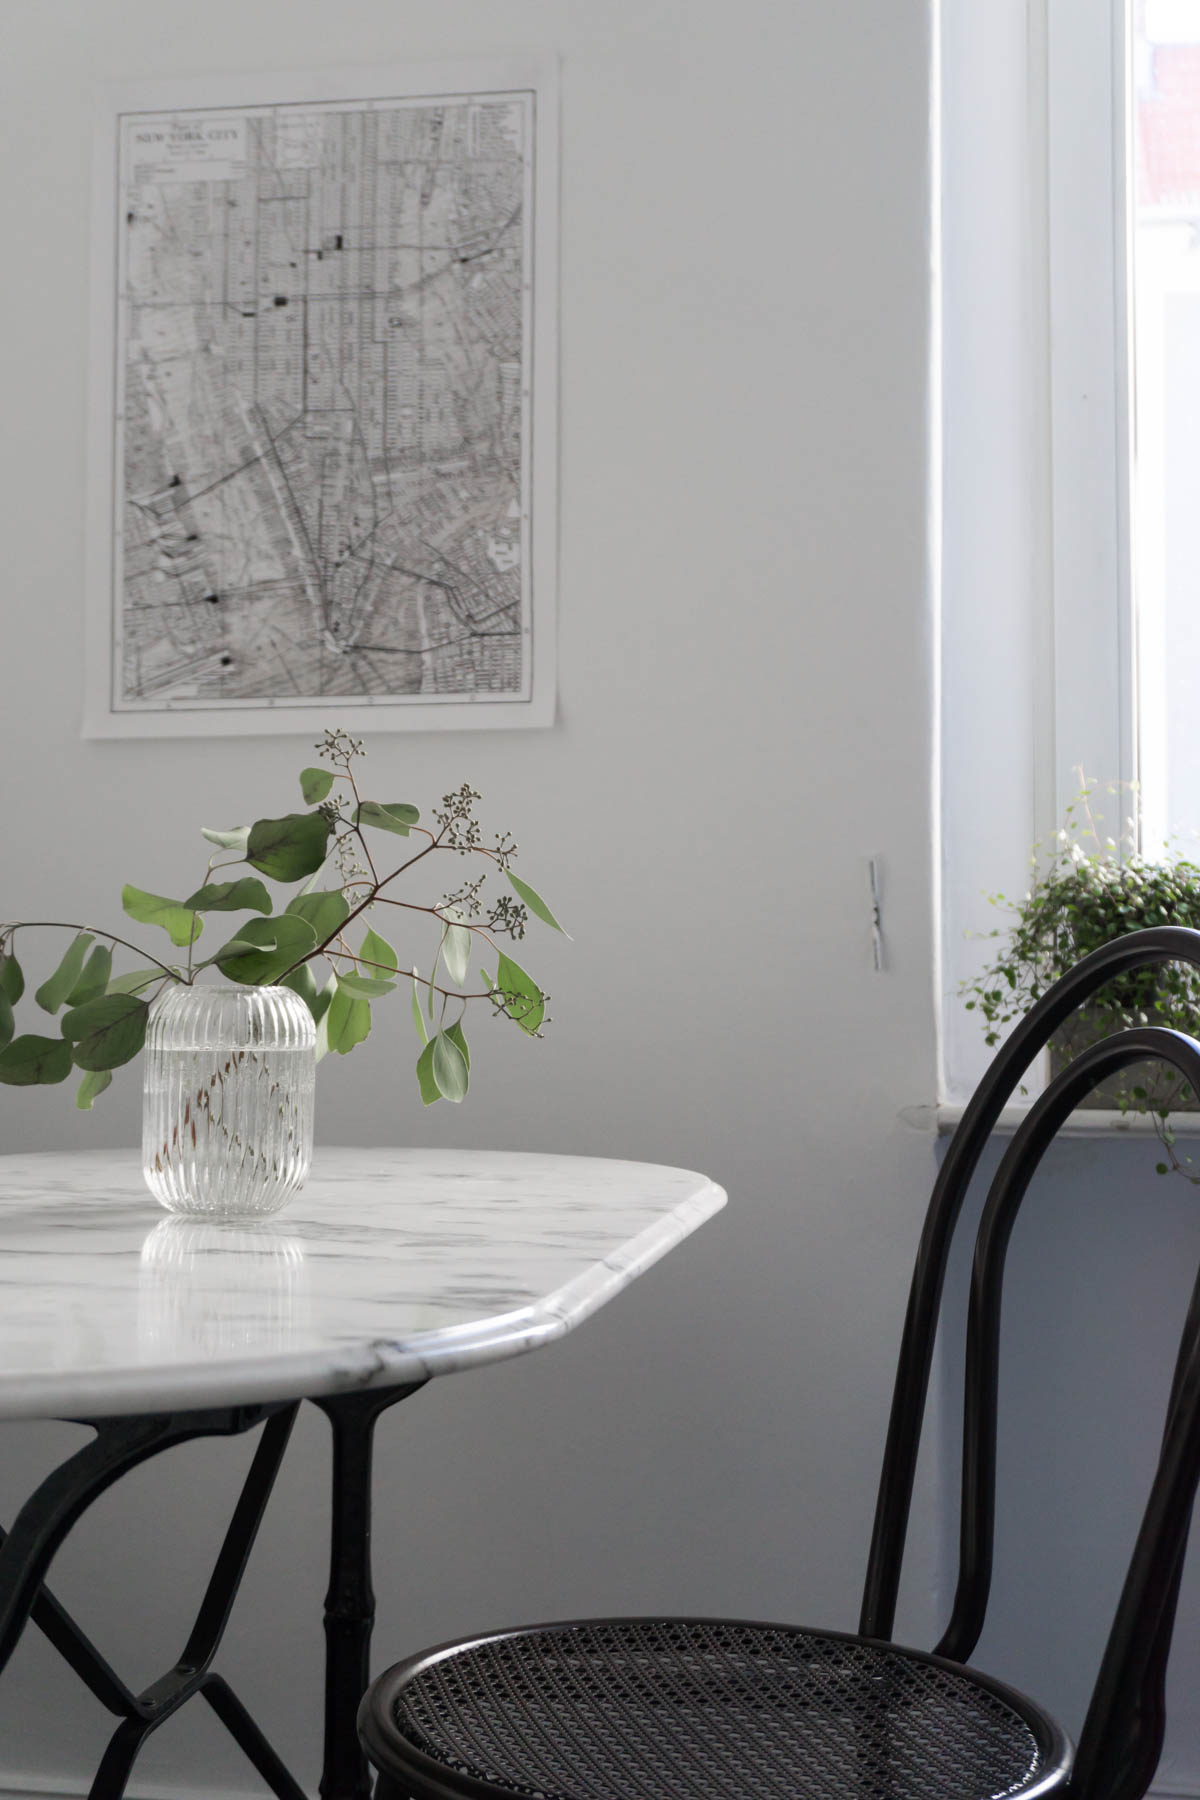 Scandinavian Kitchen - Small, White, Minimal - Interior Design // RG Daily Blog